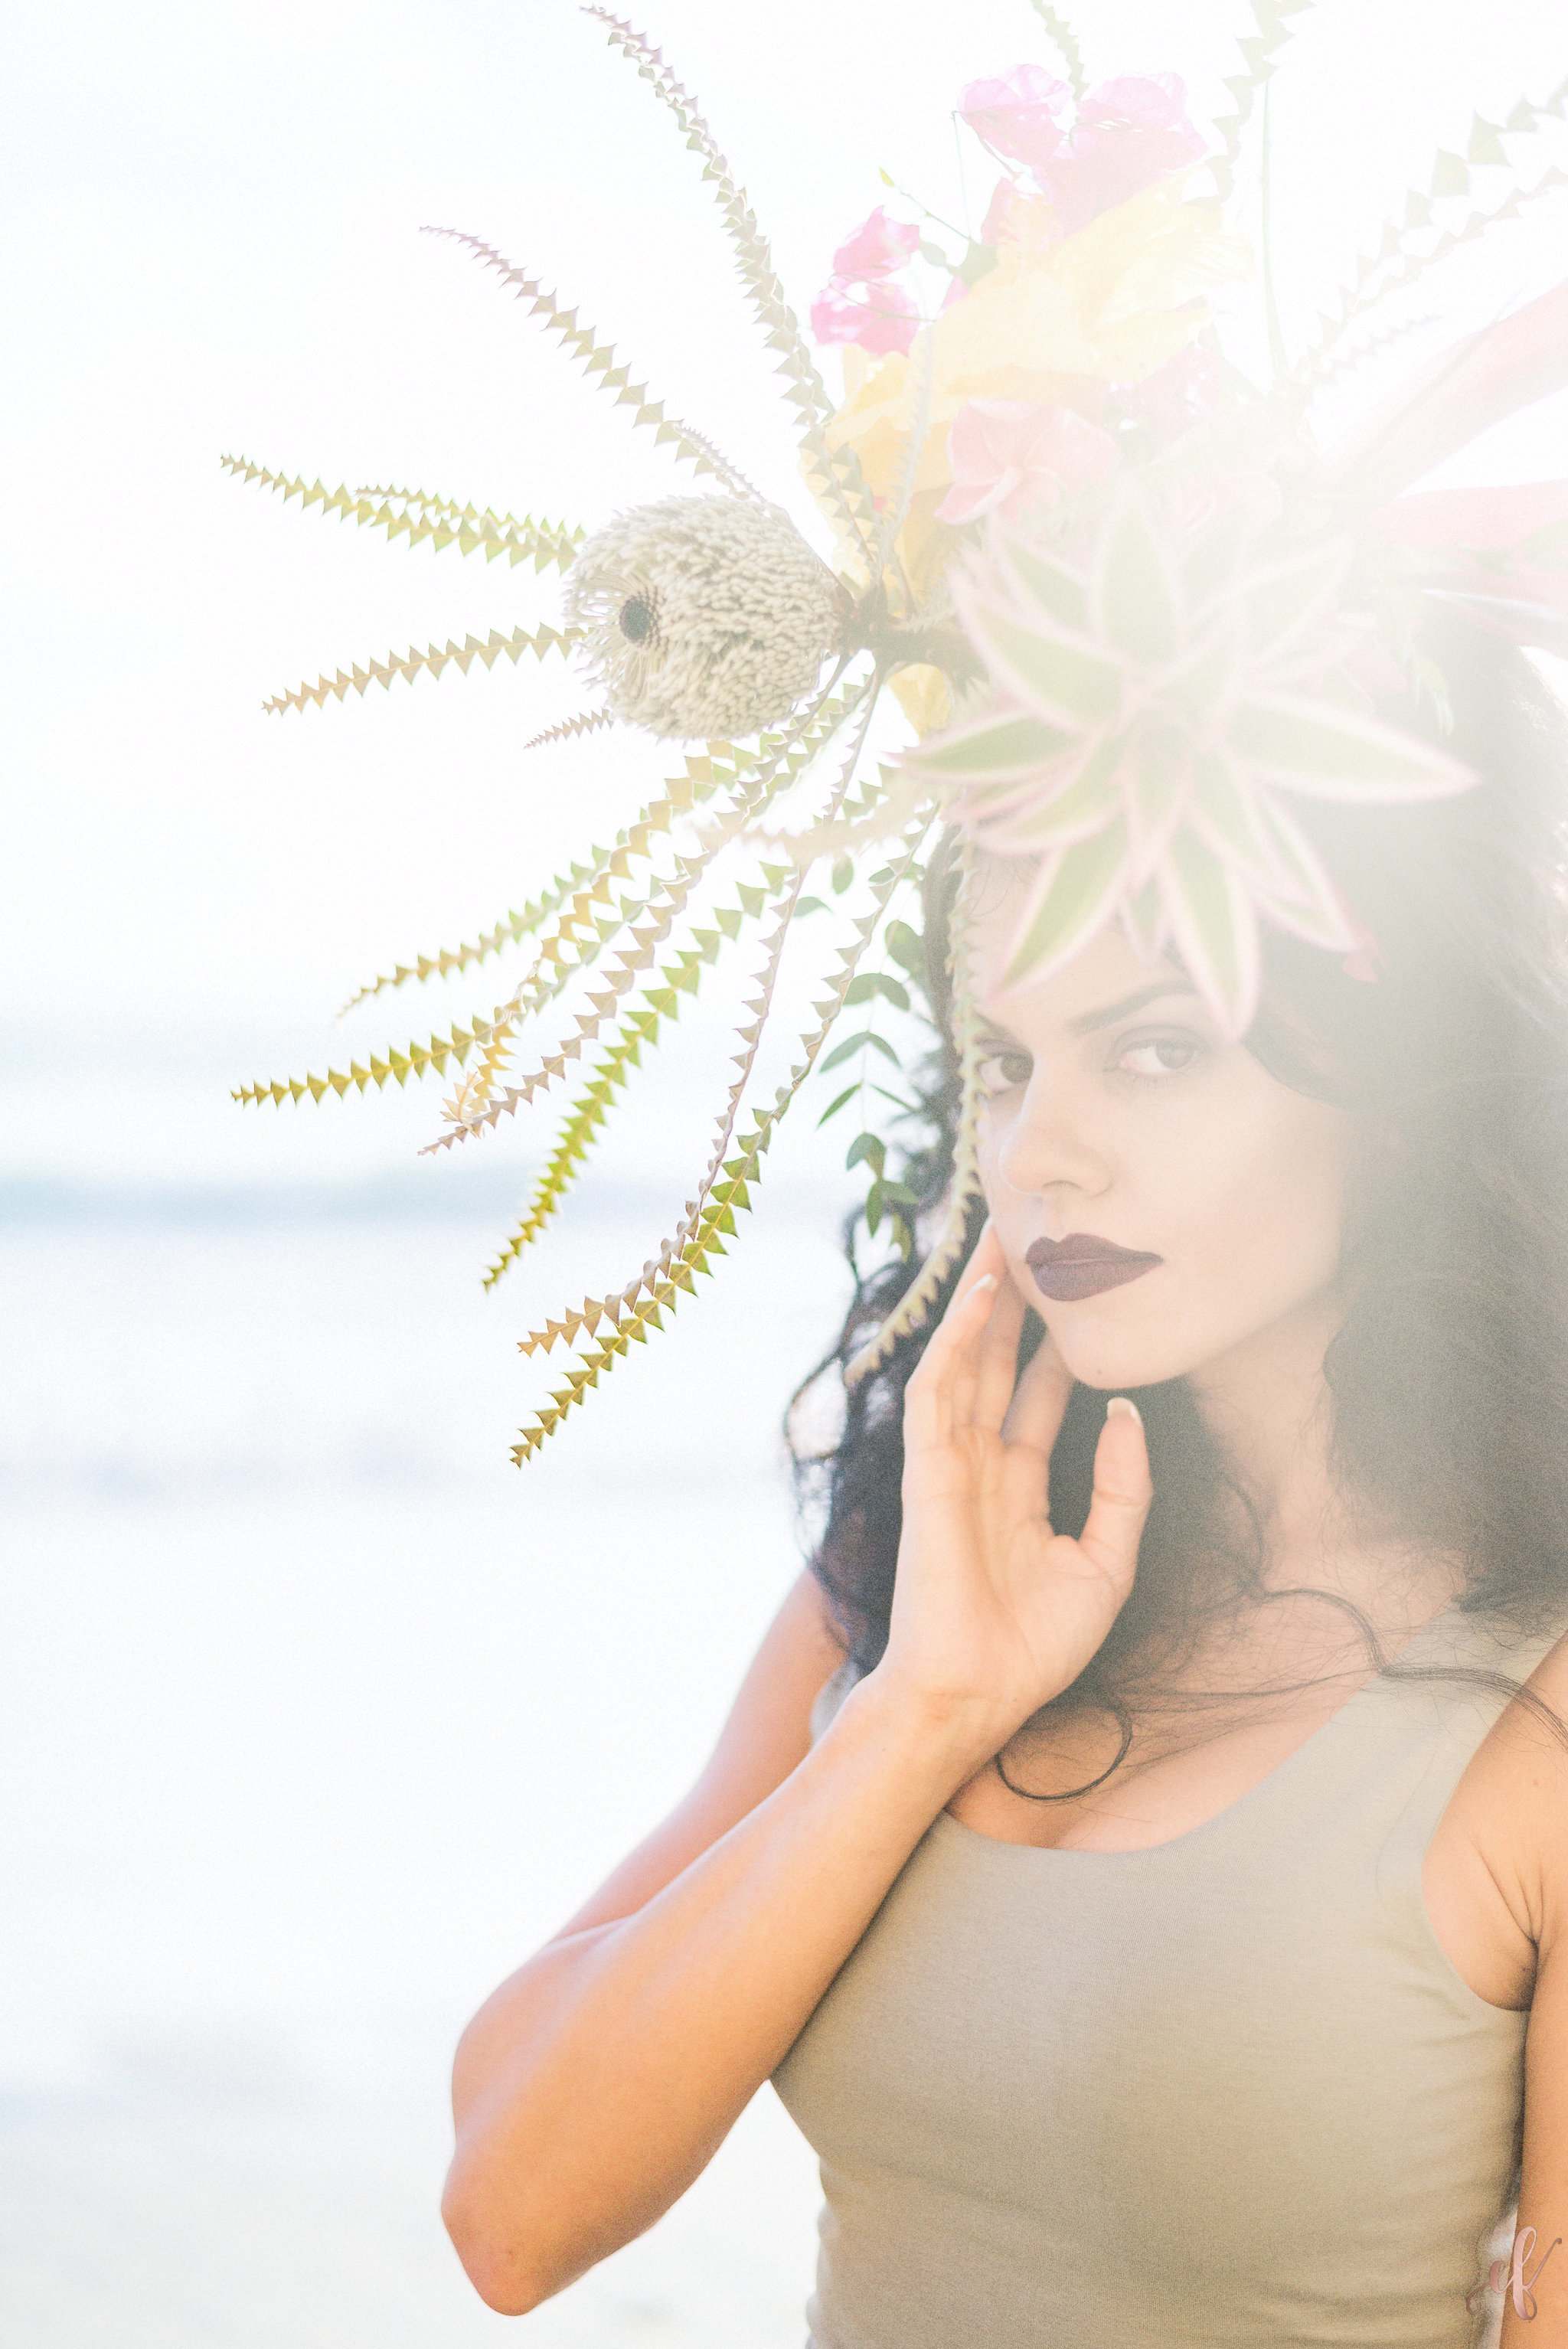 San Diego Portrait Photographer | Flower Crown | Ernie & Fiona | Rae Florae